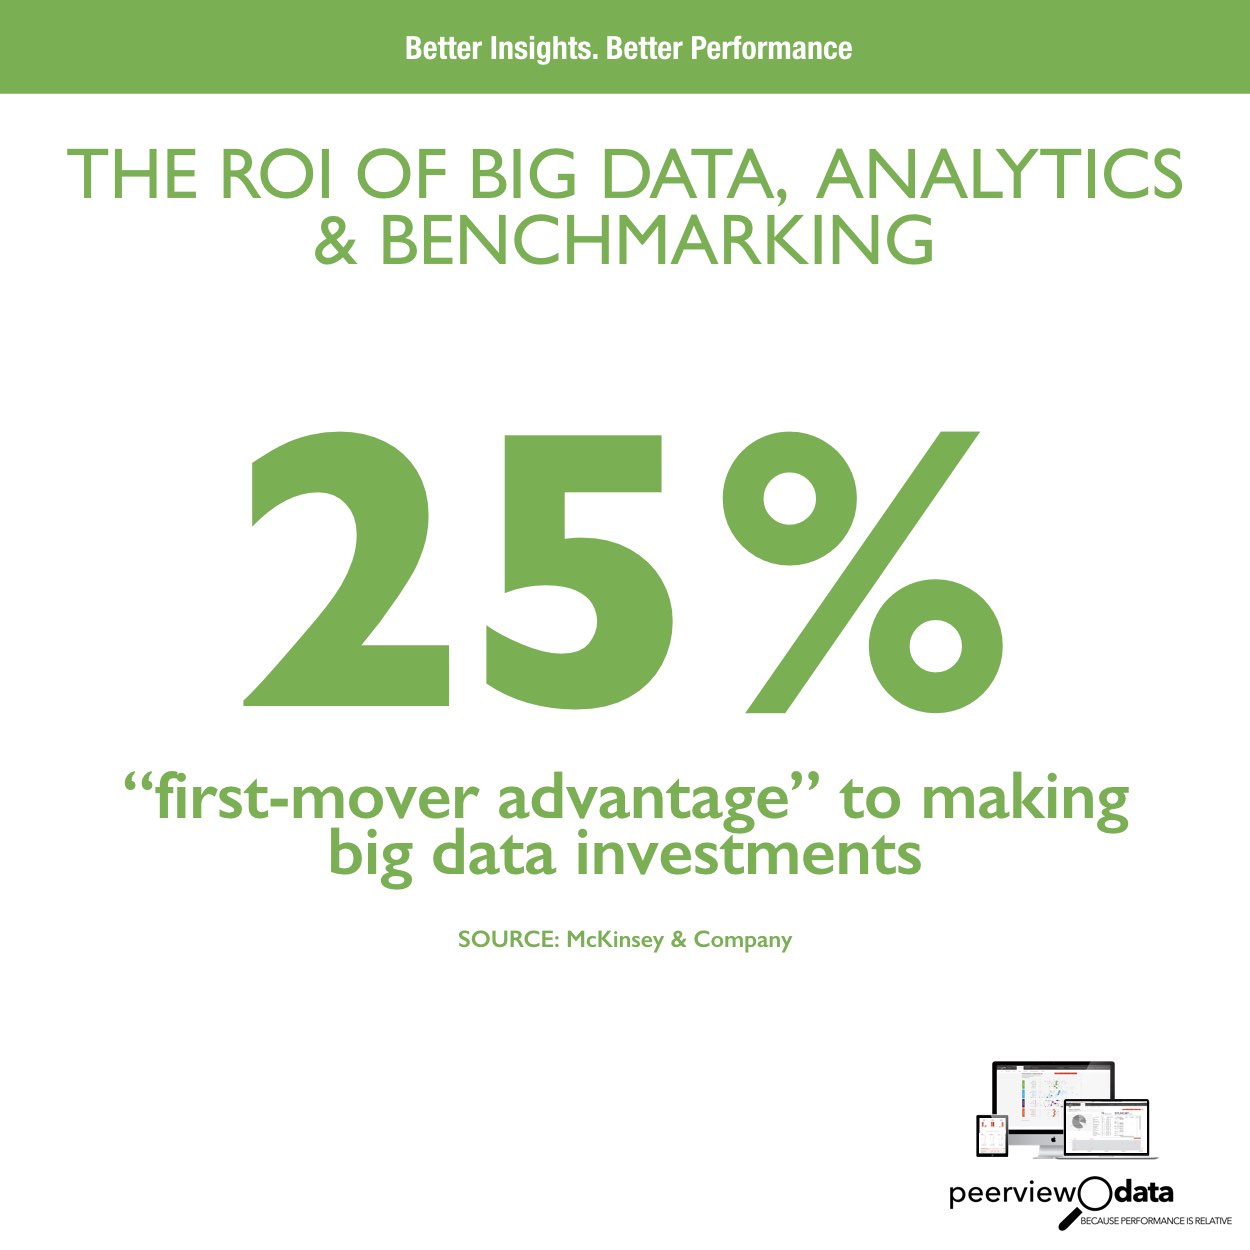 The ROI of Big Data, Analytics & Benchmarking #15